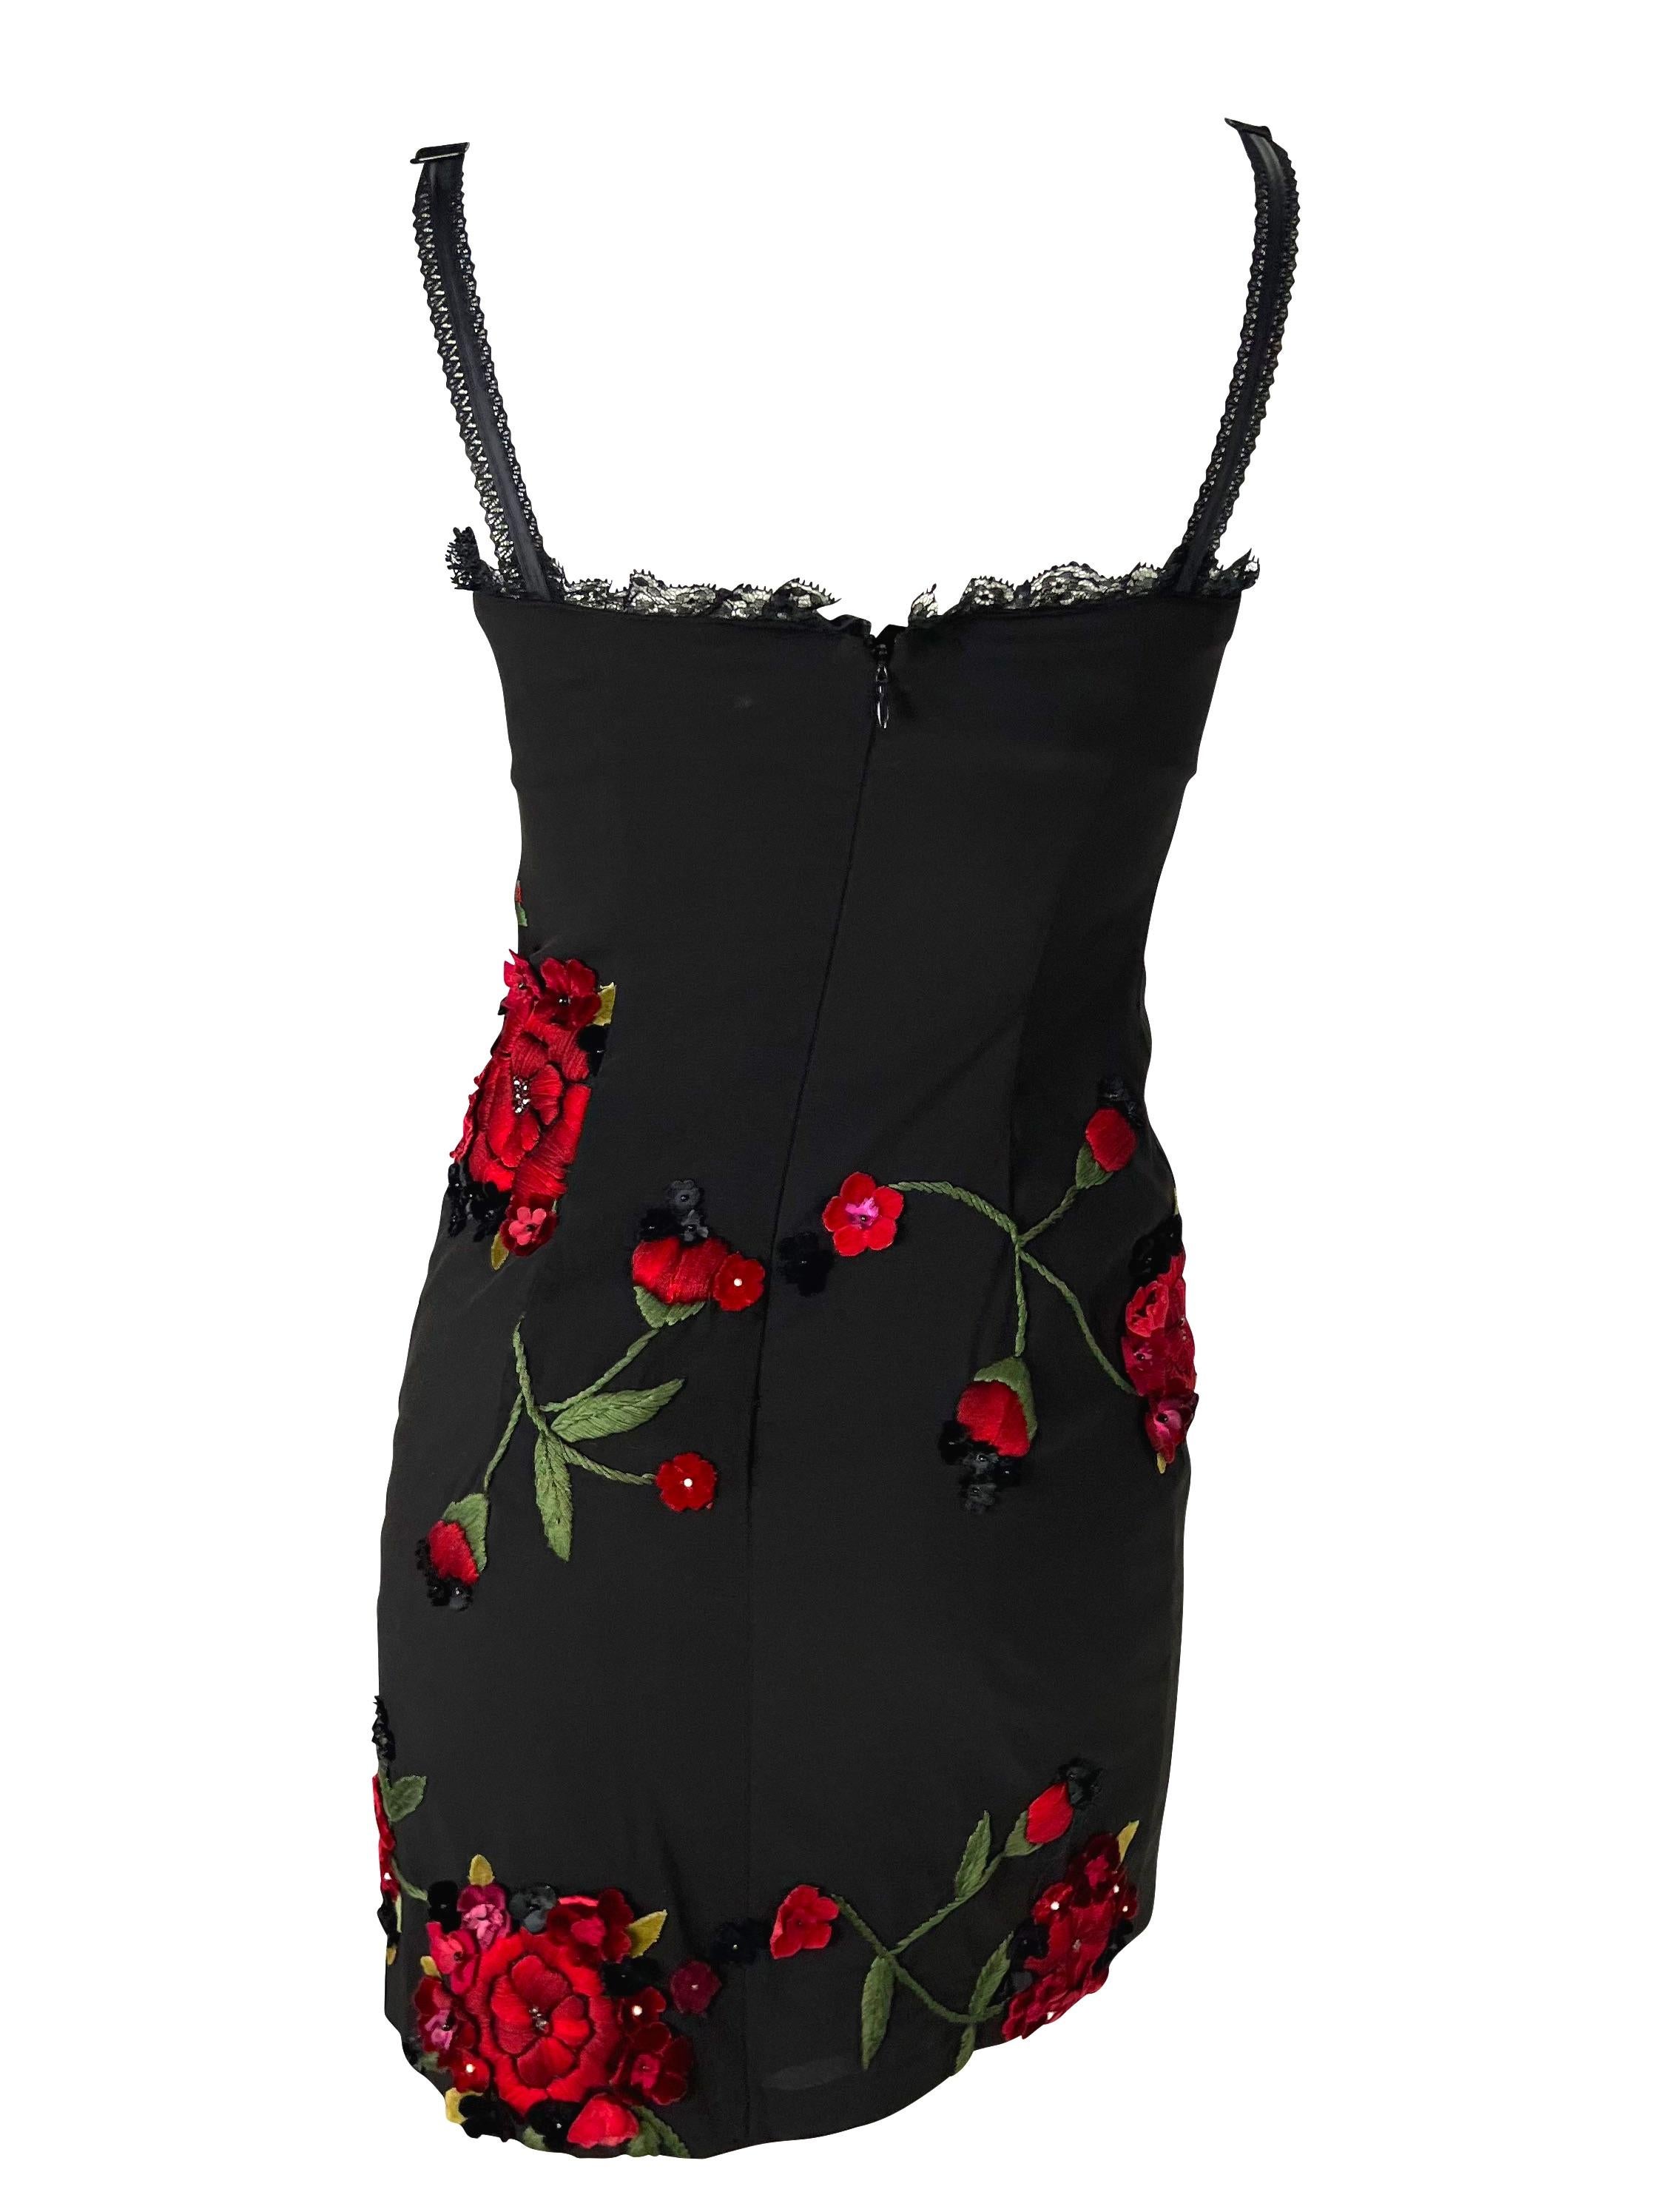 Black F/W 1997 Dolce & Gabbana Runway Red Floral Embroidered Rhinestone Bustier Dress